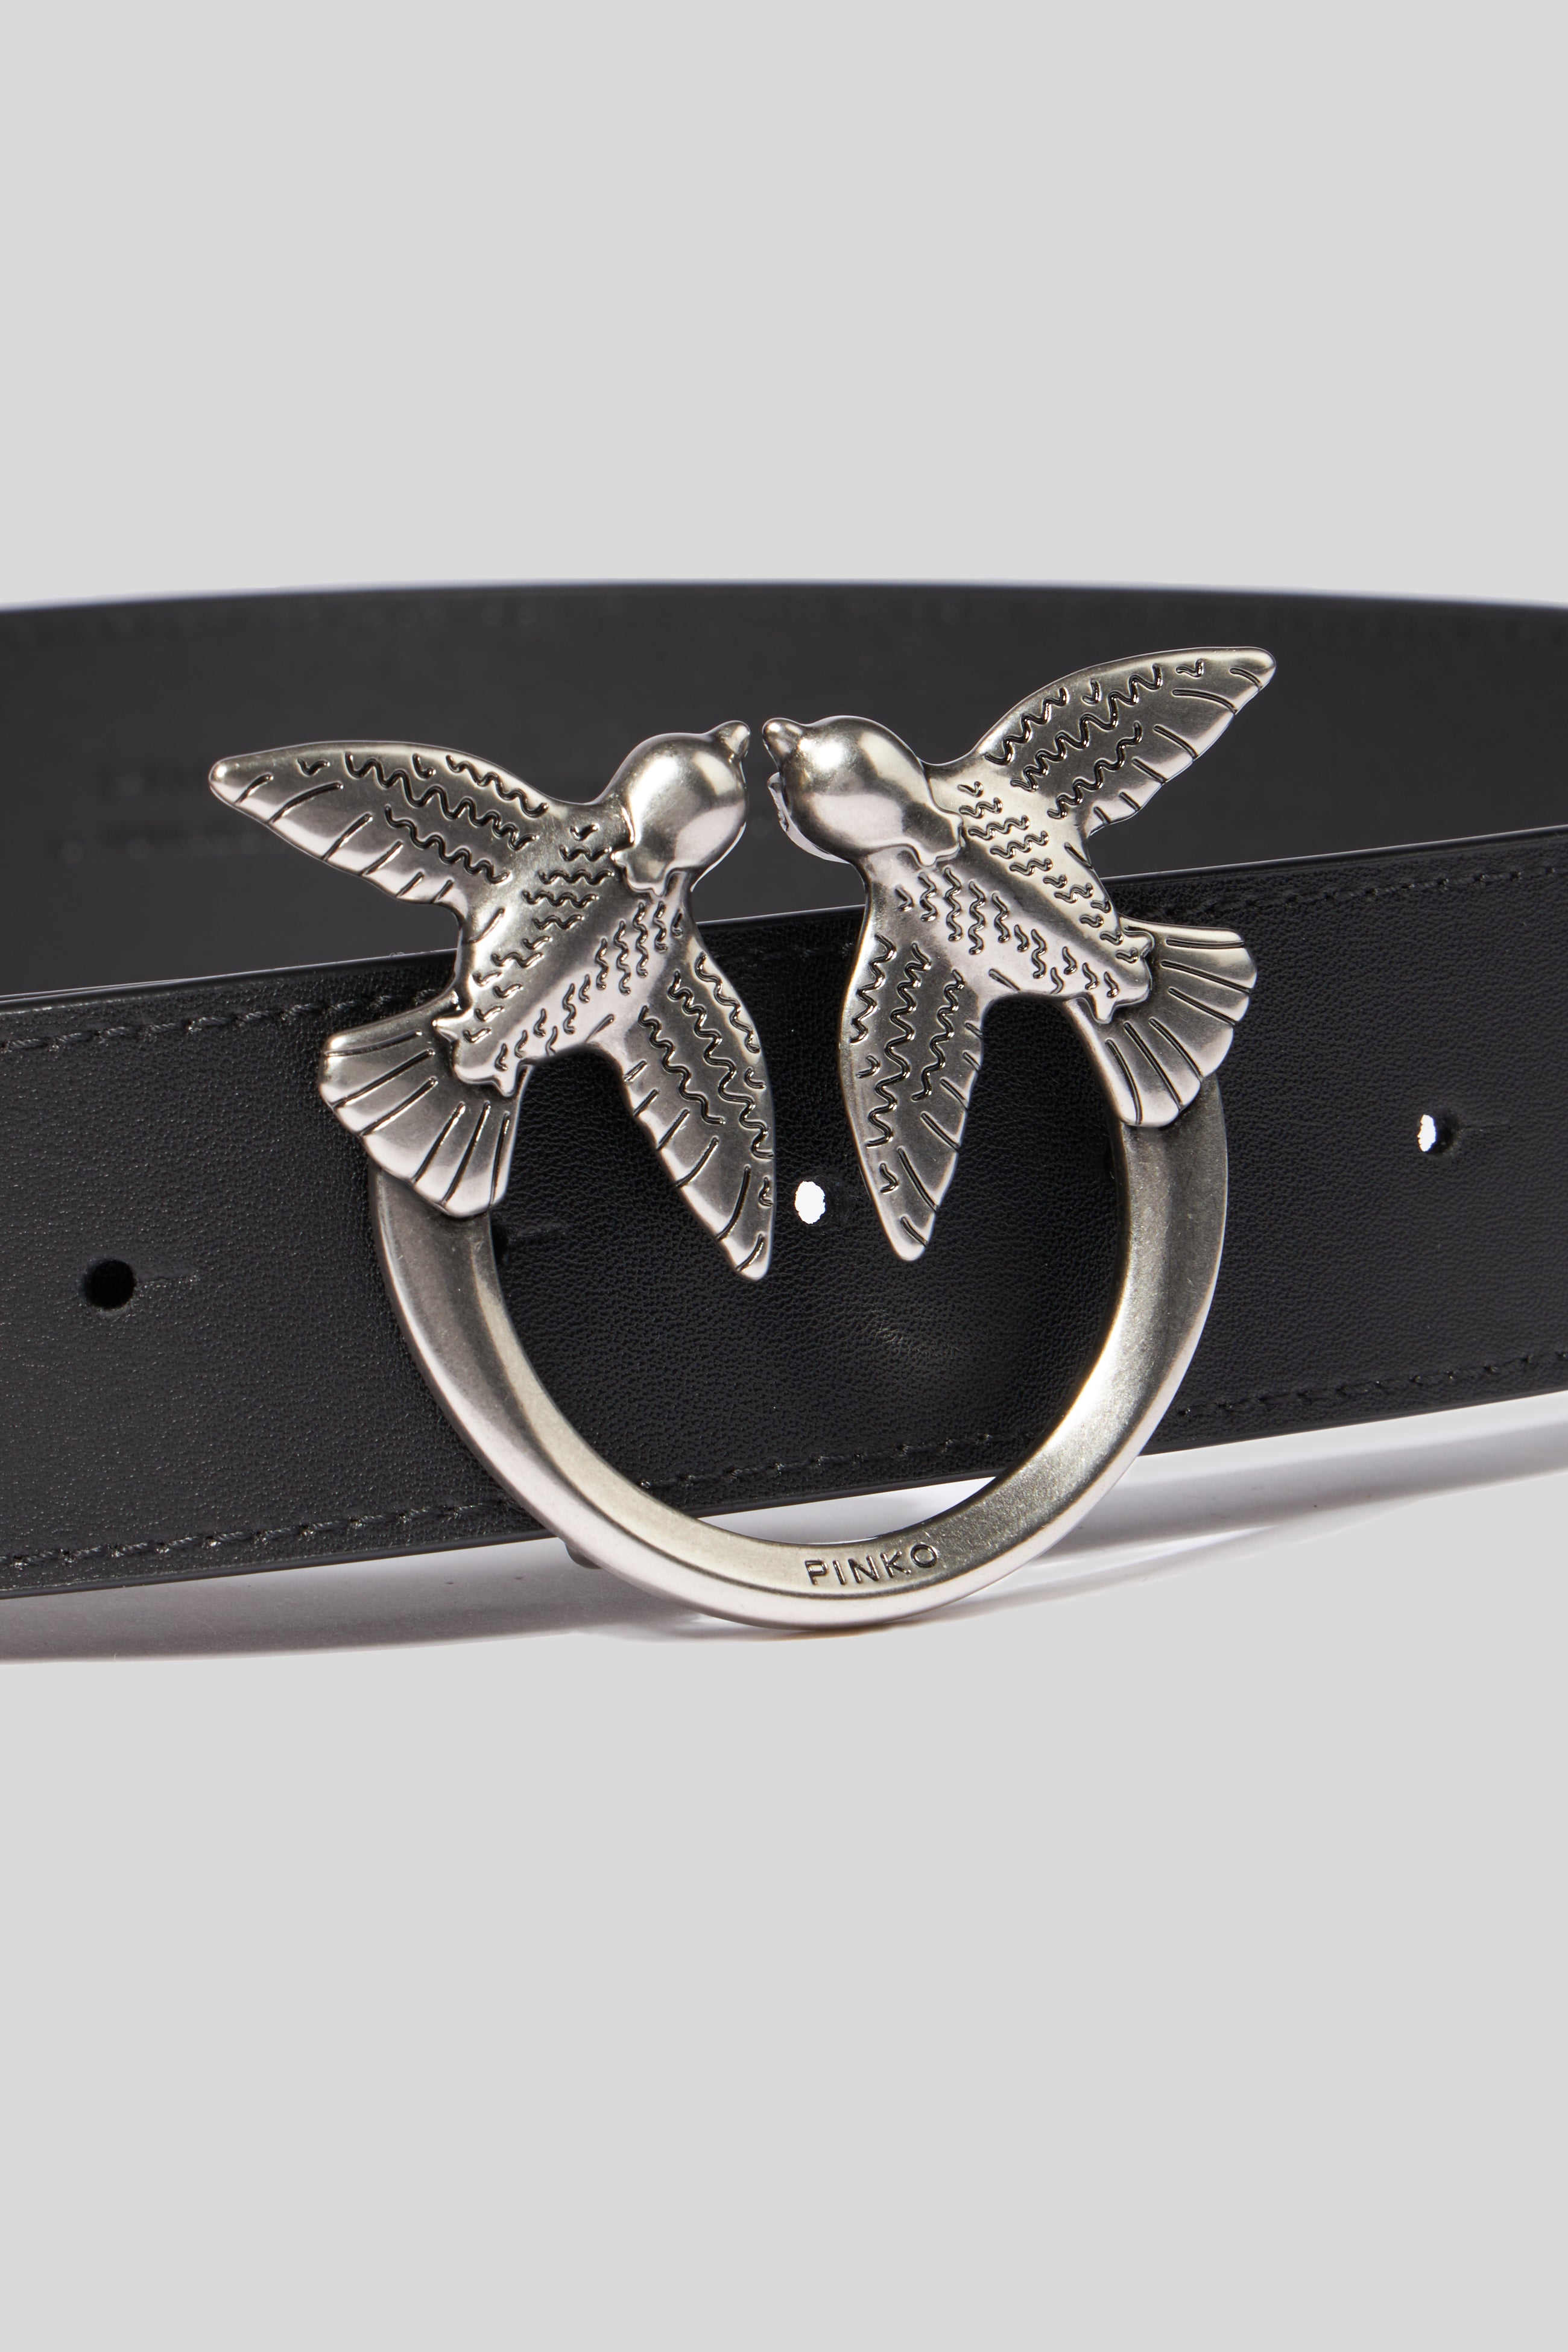 PINKO Love Birds leather belt